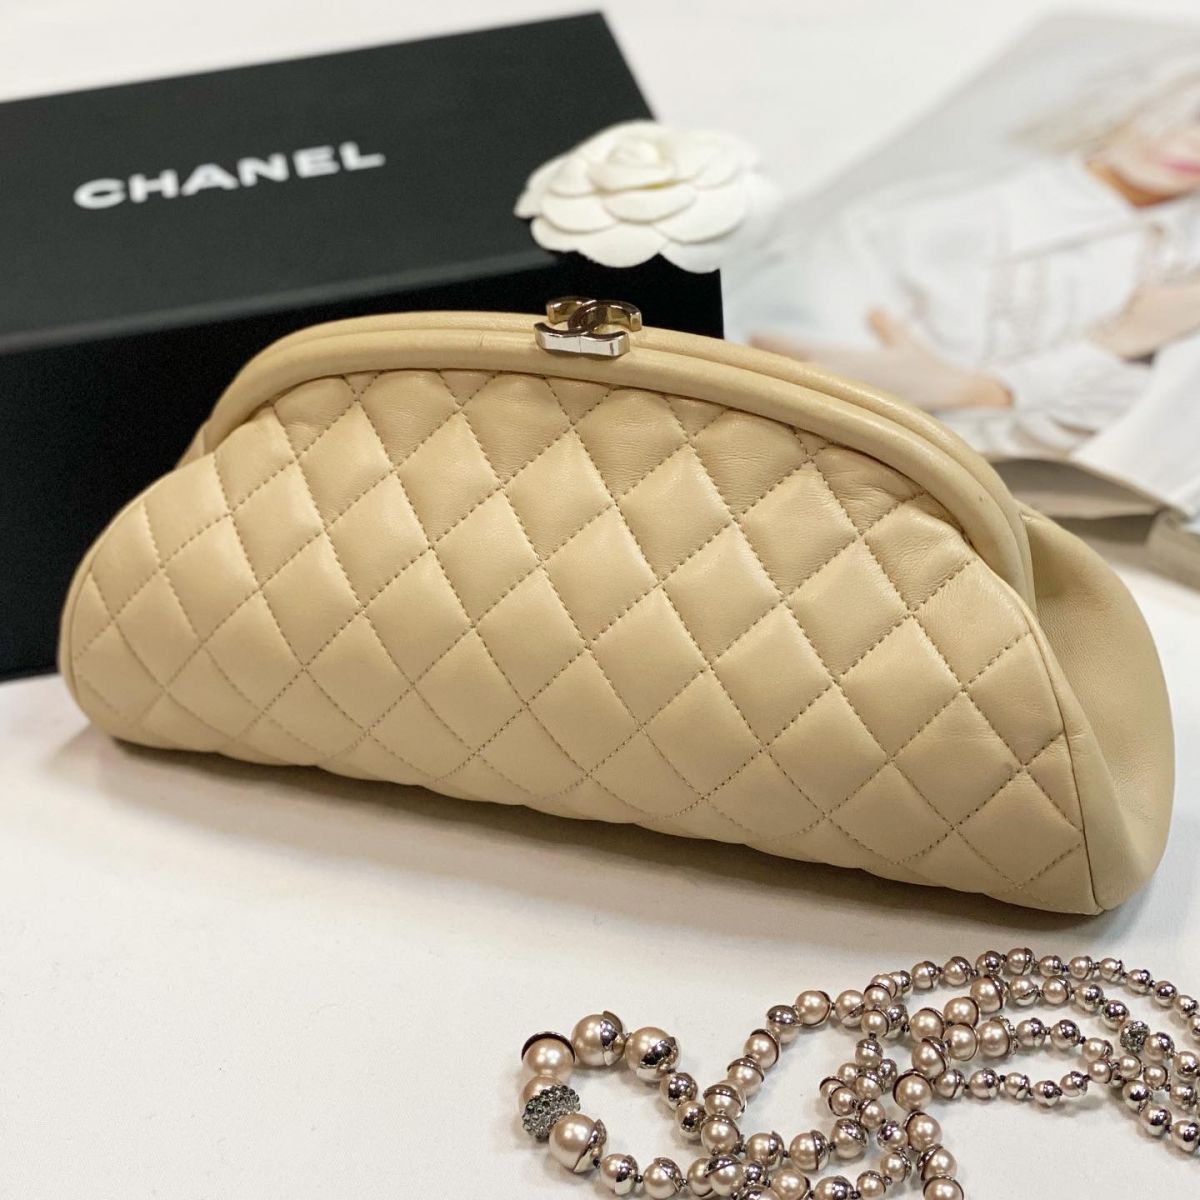 Клатч Chanel размер 27/15 цена 76 925 руб 